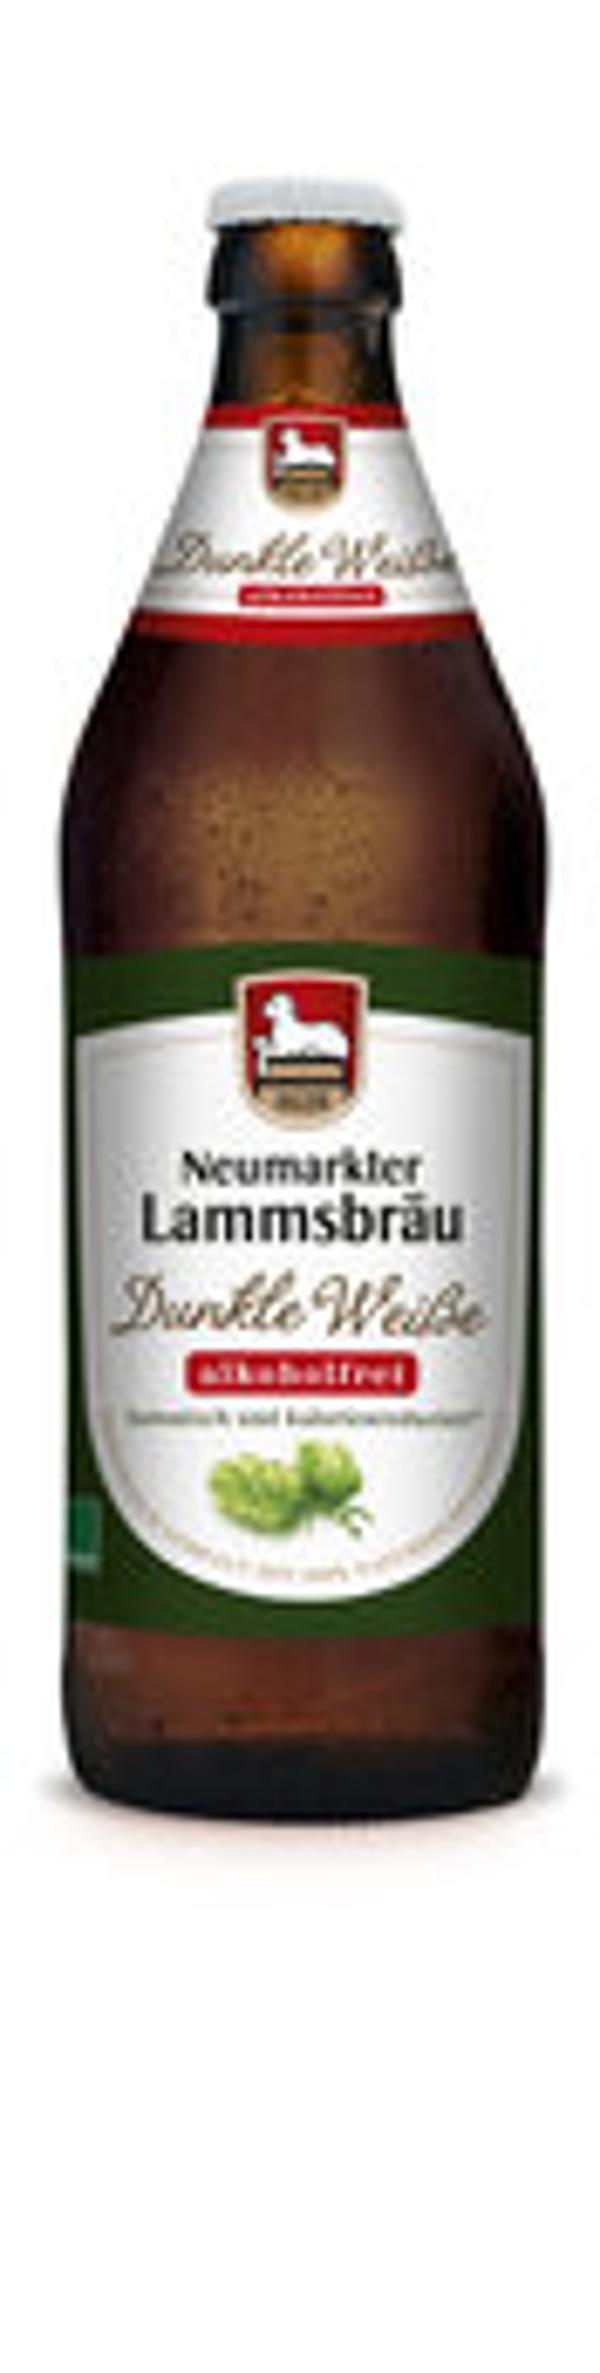 Produktfoto zu Lammsbräu Dunkle Weisse alkoholfrei [0,5l]